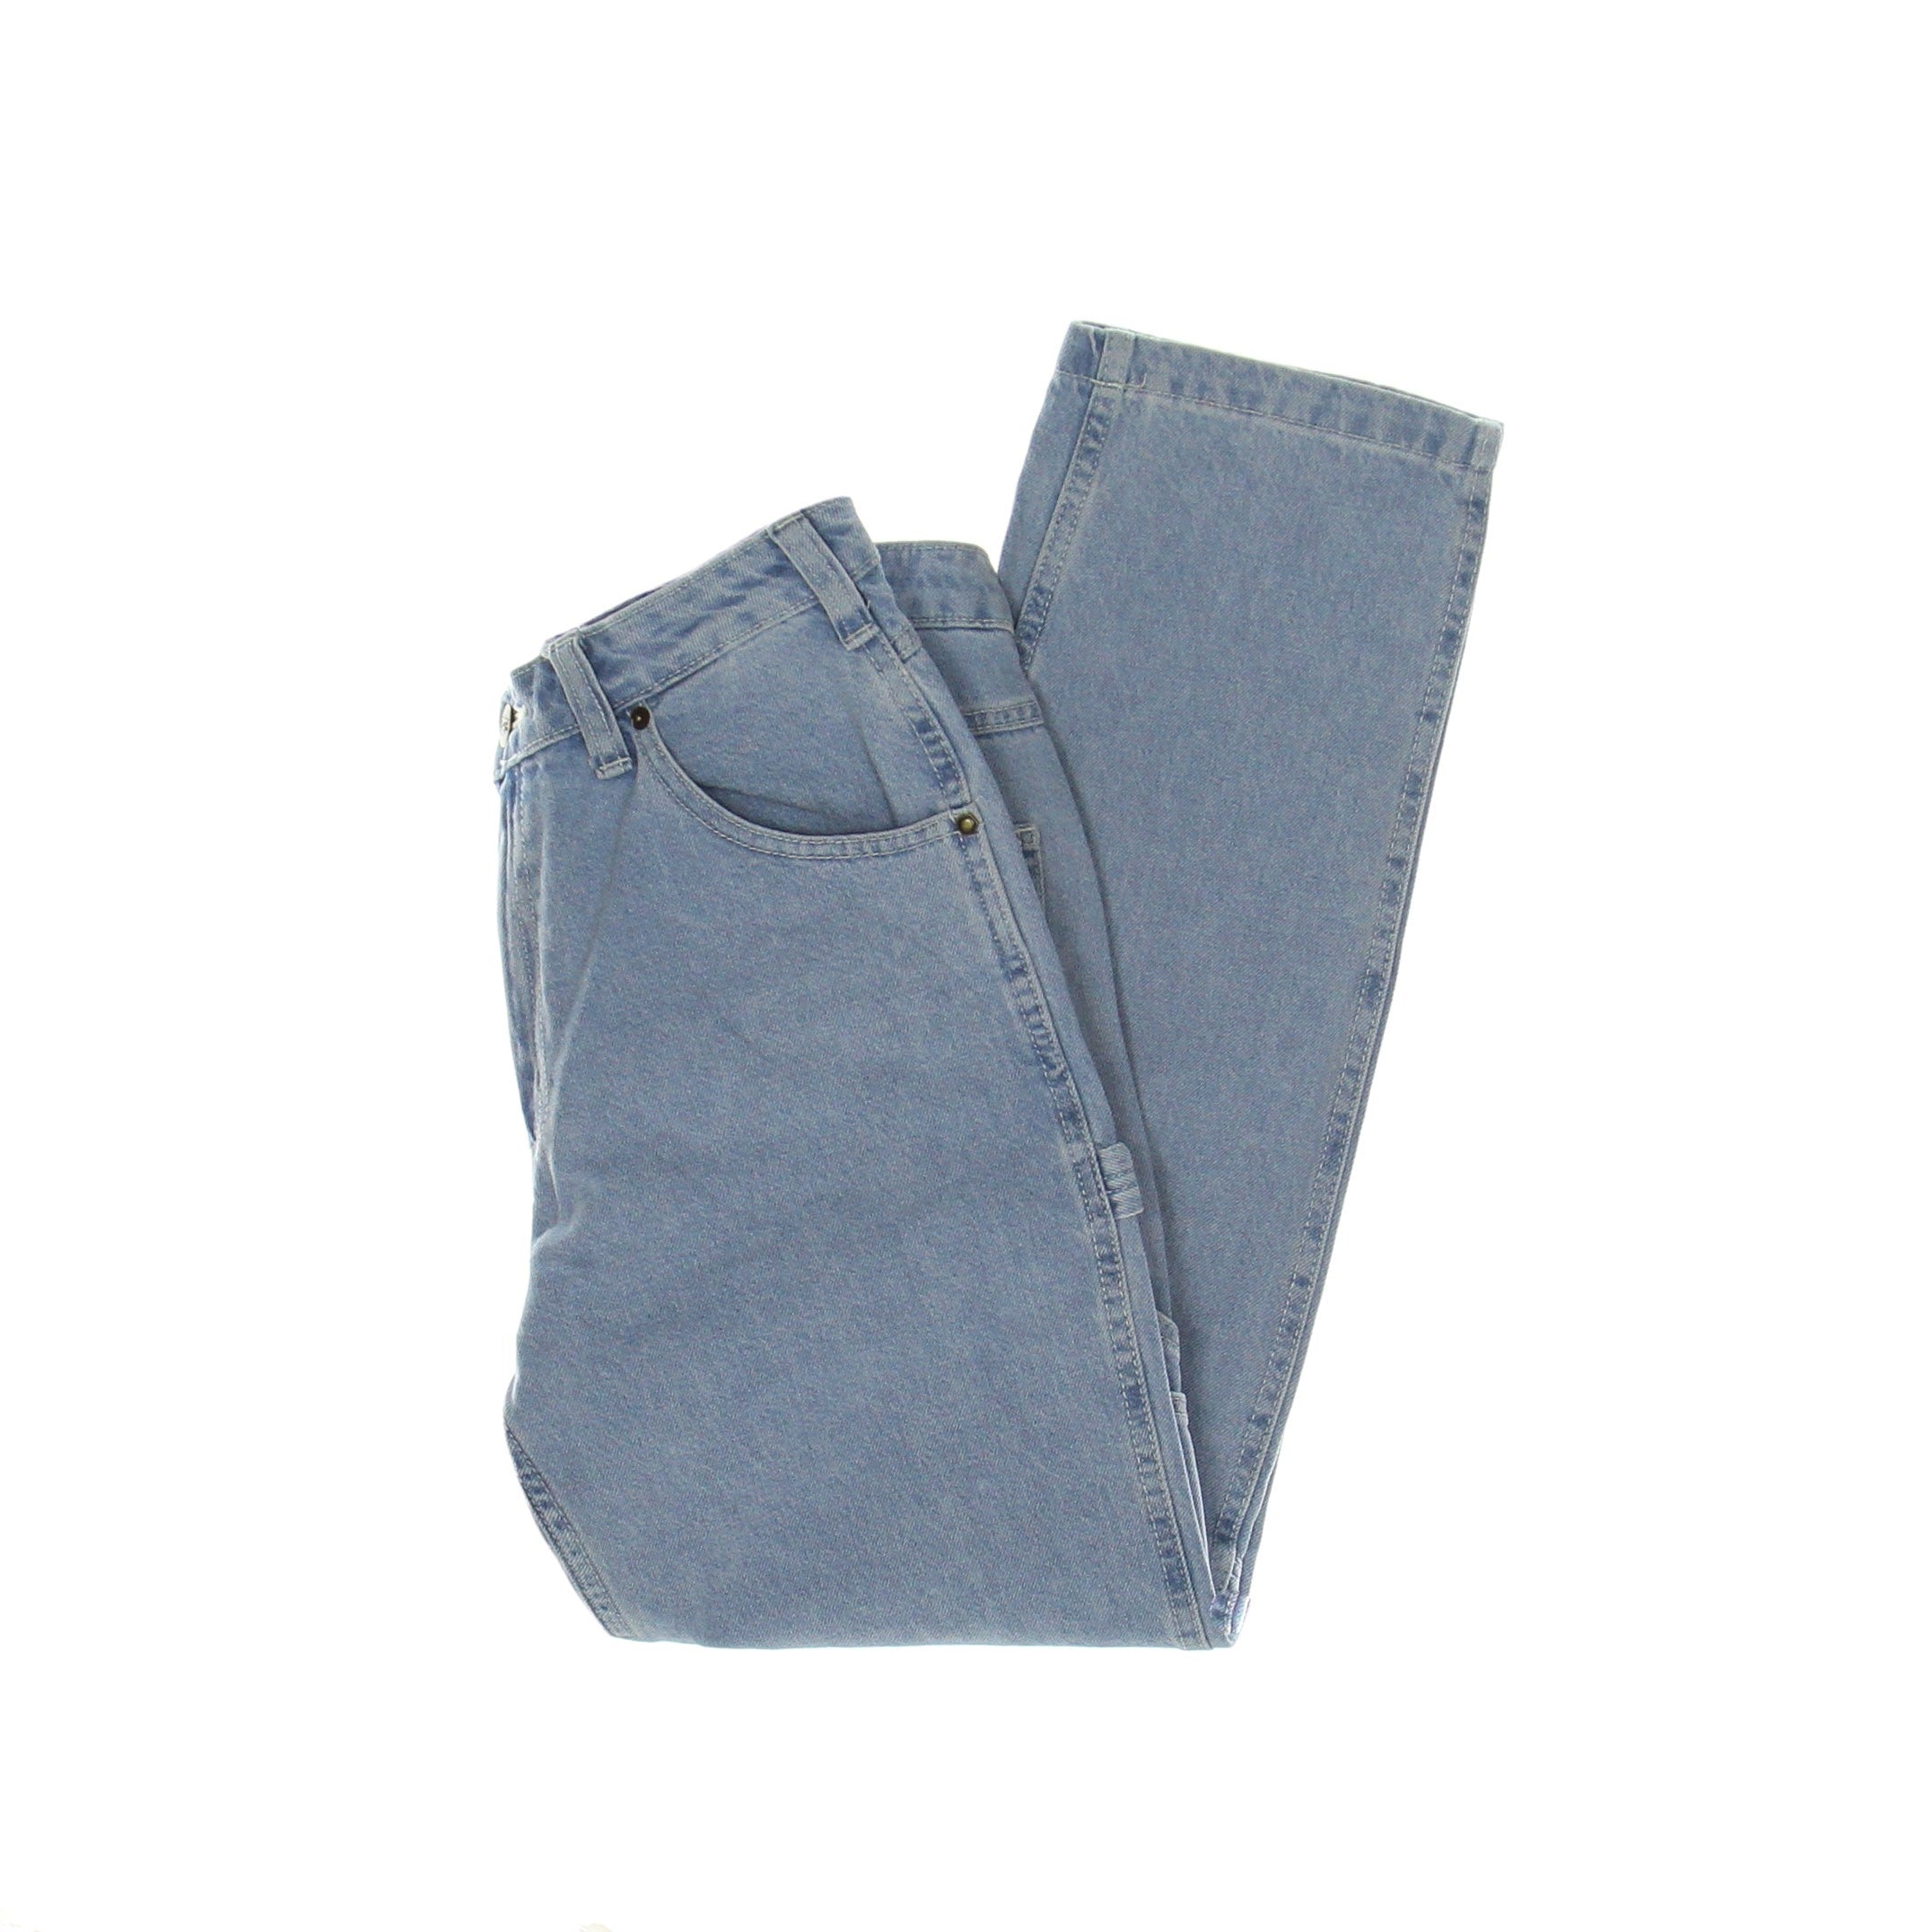 Ellendale Women's Jeans Denim Vintage Aged